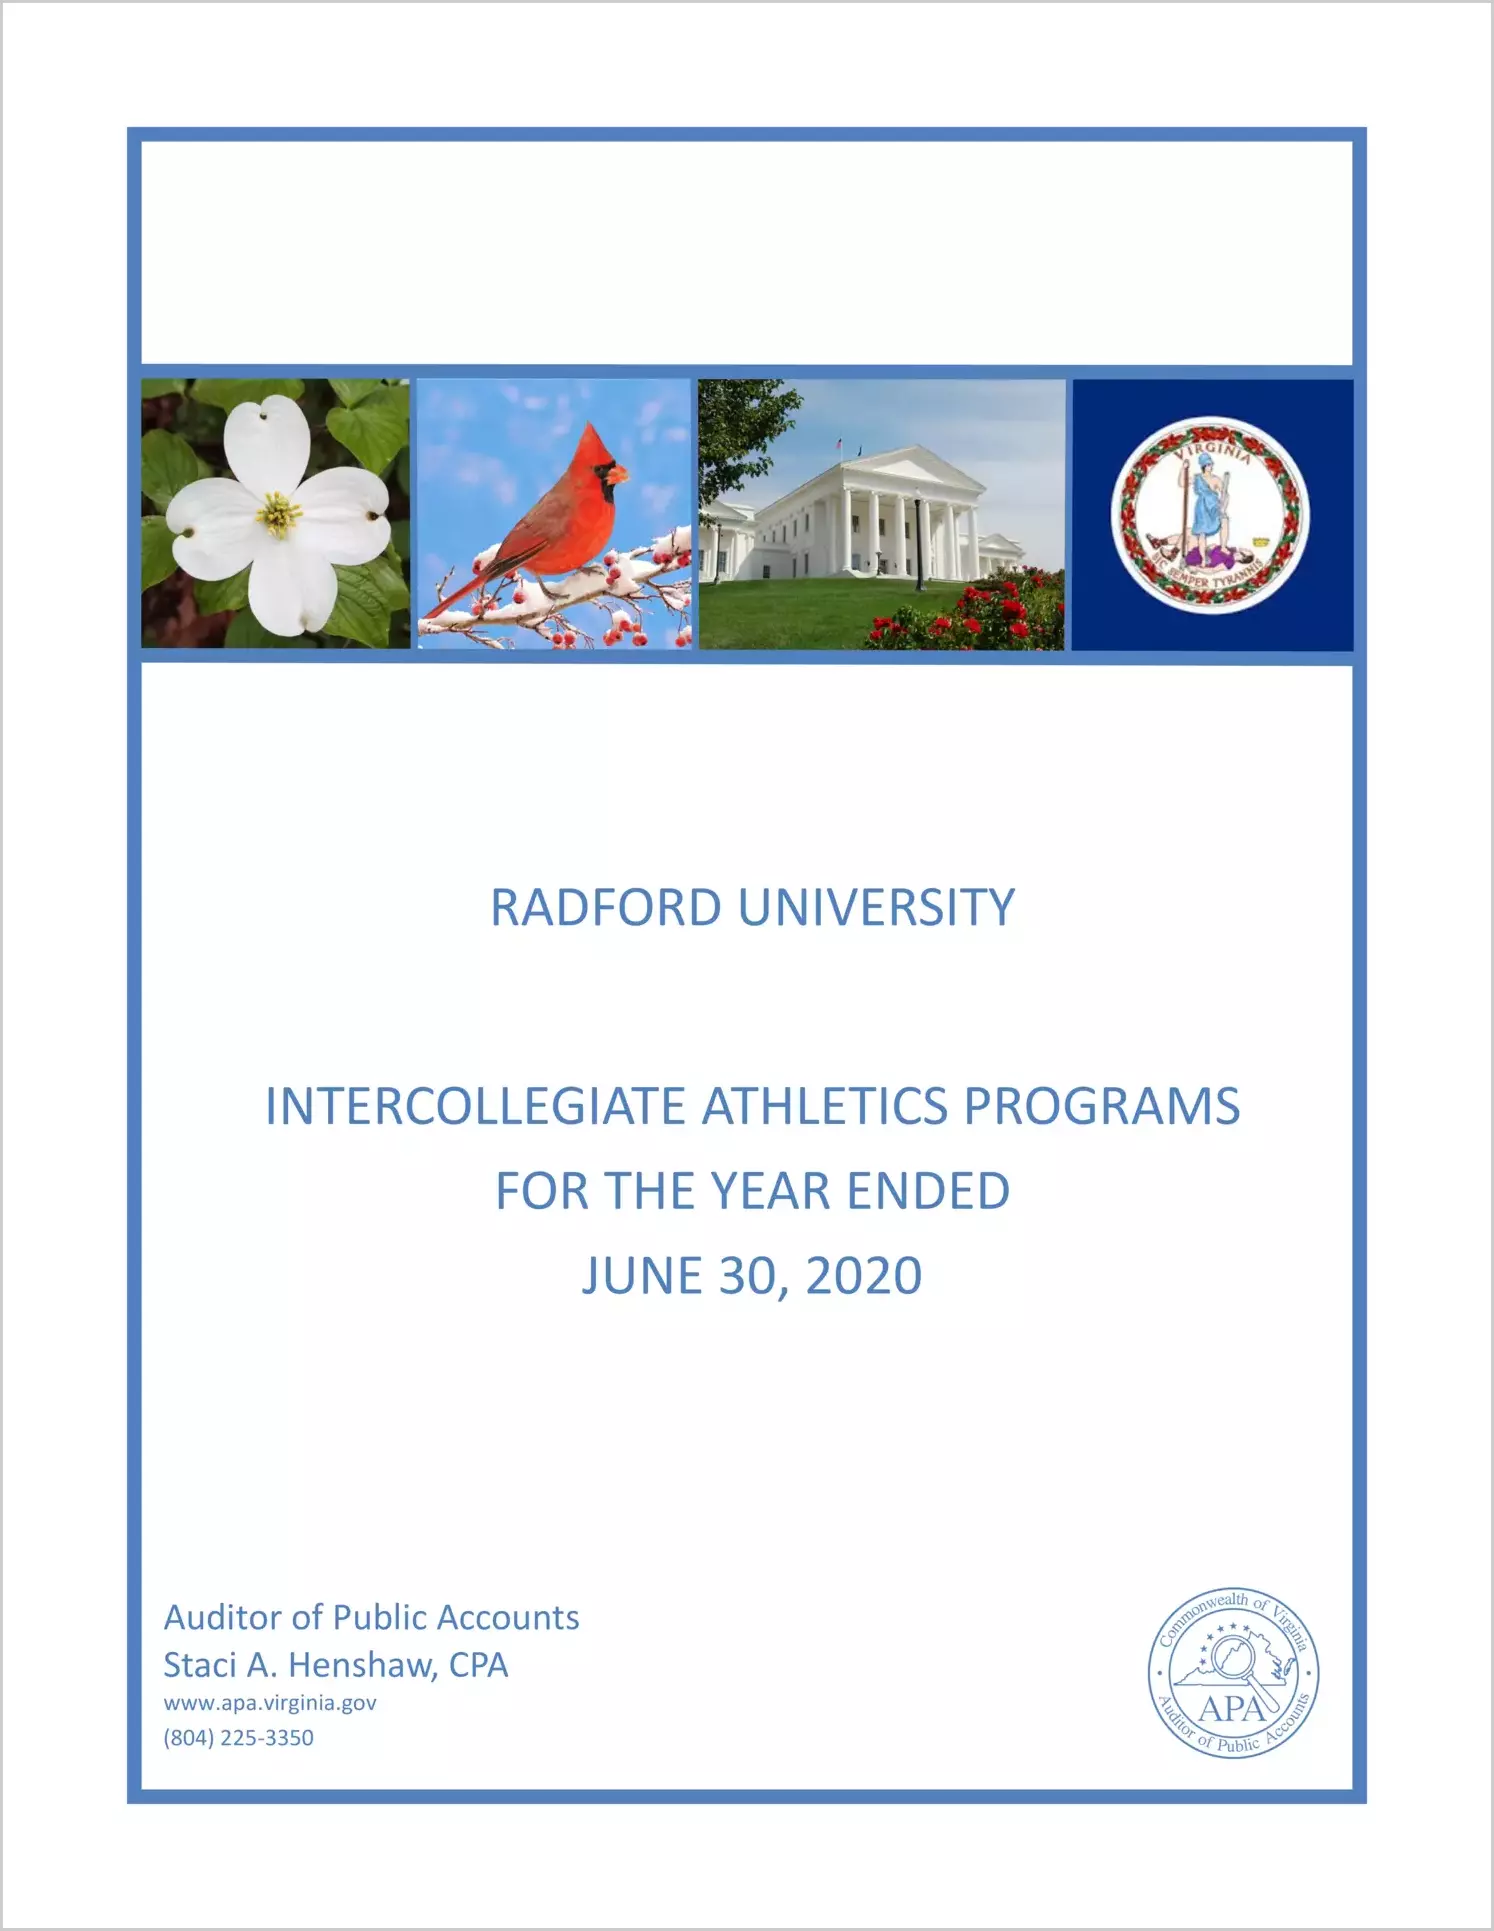 Radford University Intercollegiate Athletics Programs for the year ended June 30, 2020